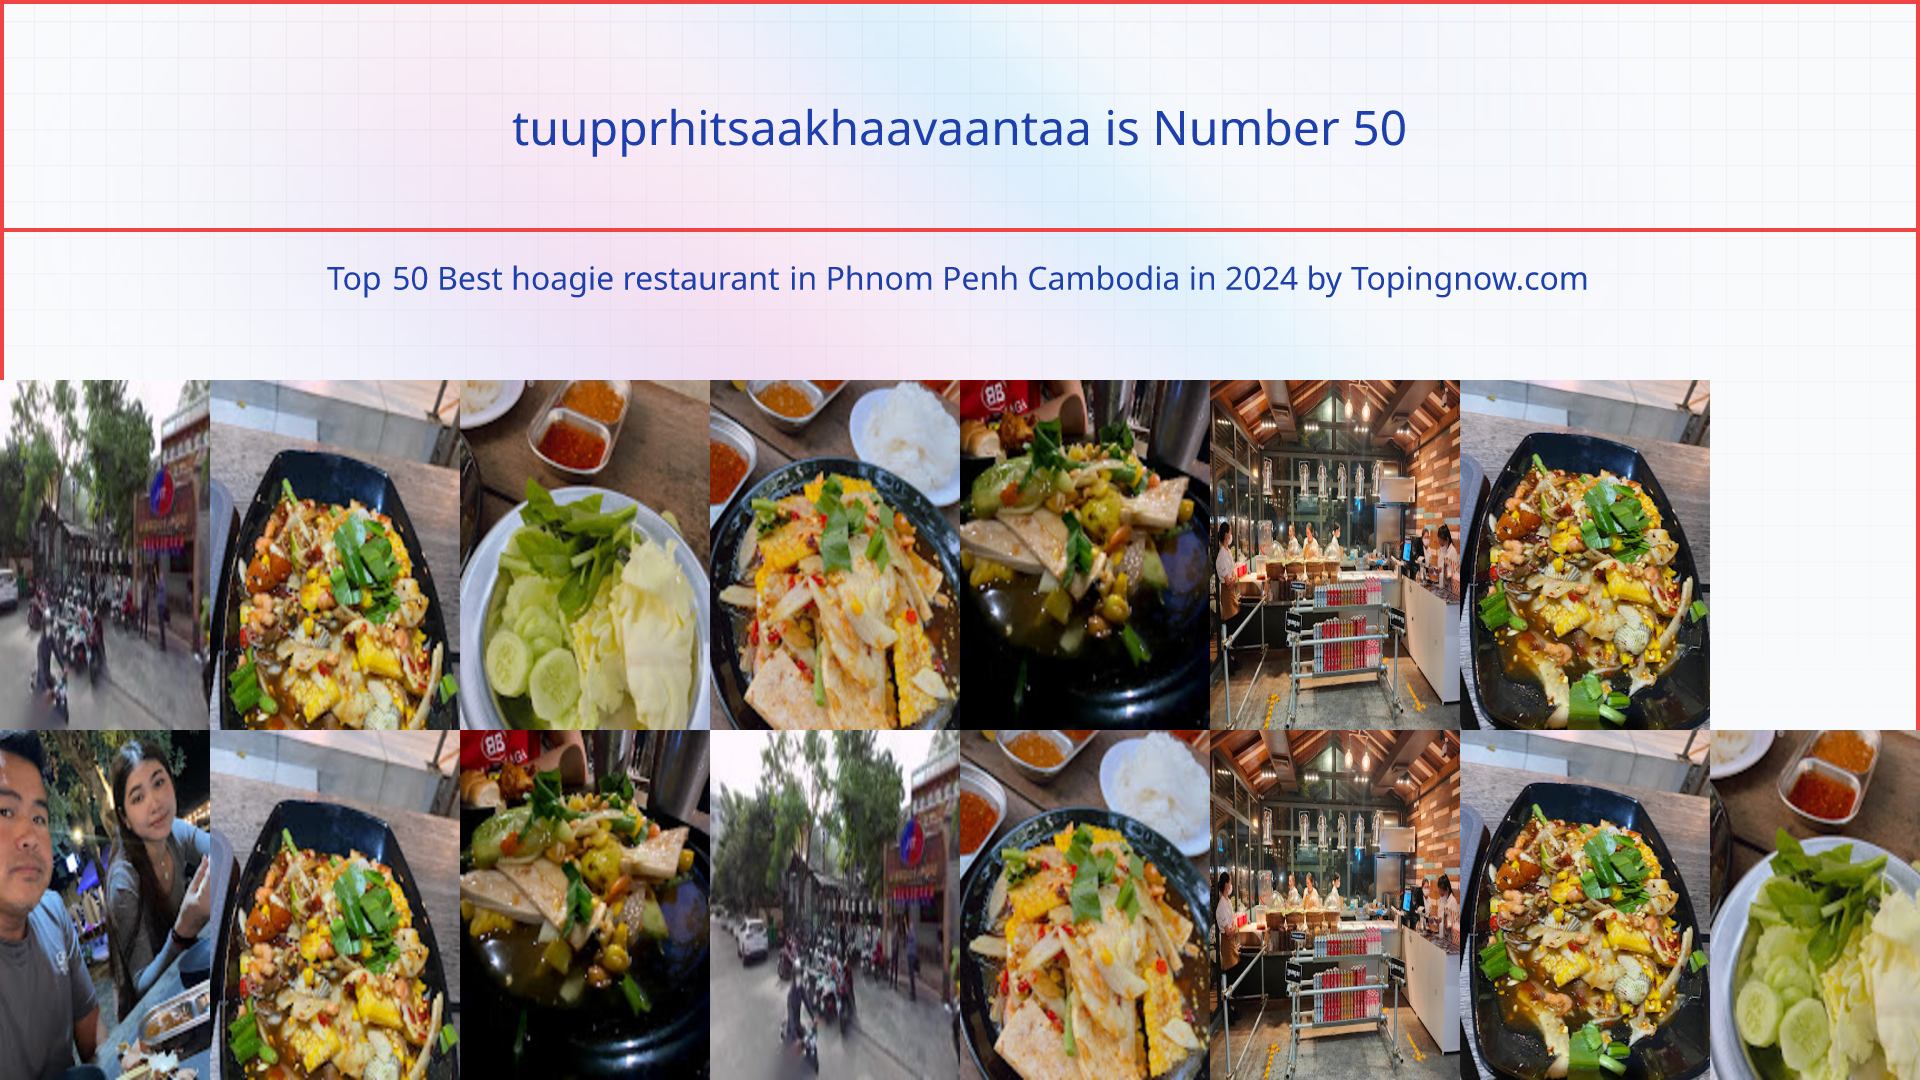 tuupprhitsaakhaavaantaa: Top 50 Best hoagie restaurant in Phnom Penh Cambodia in 2024